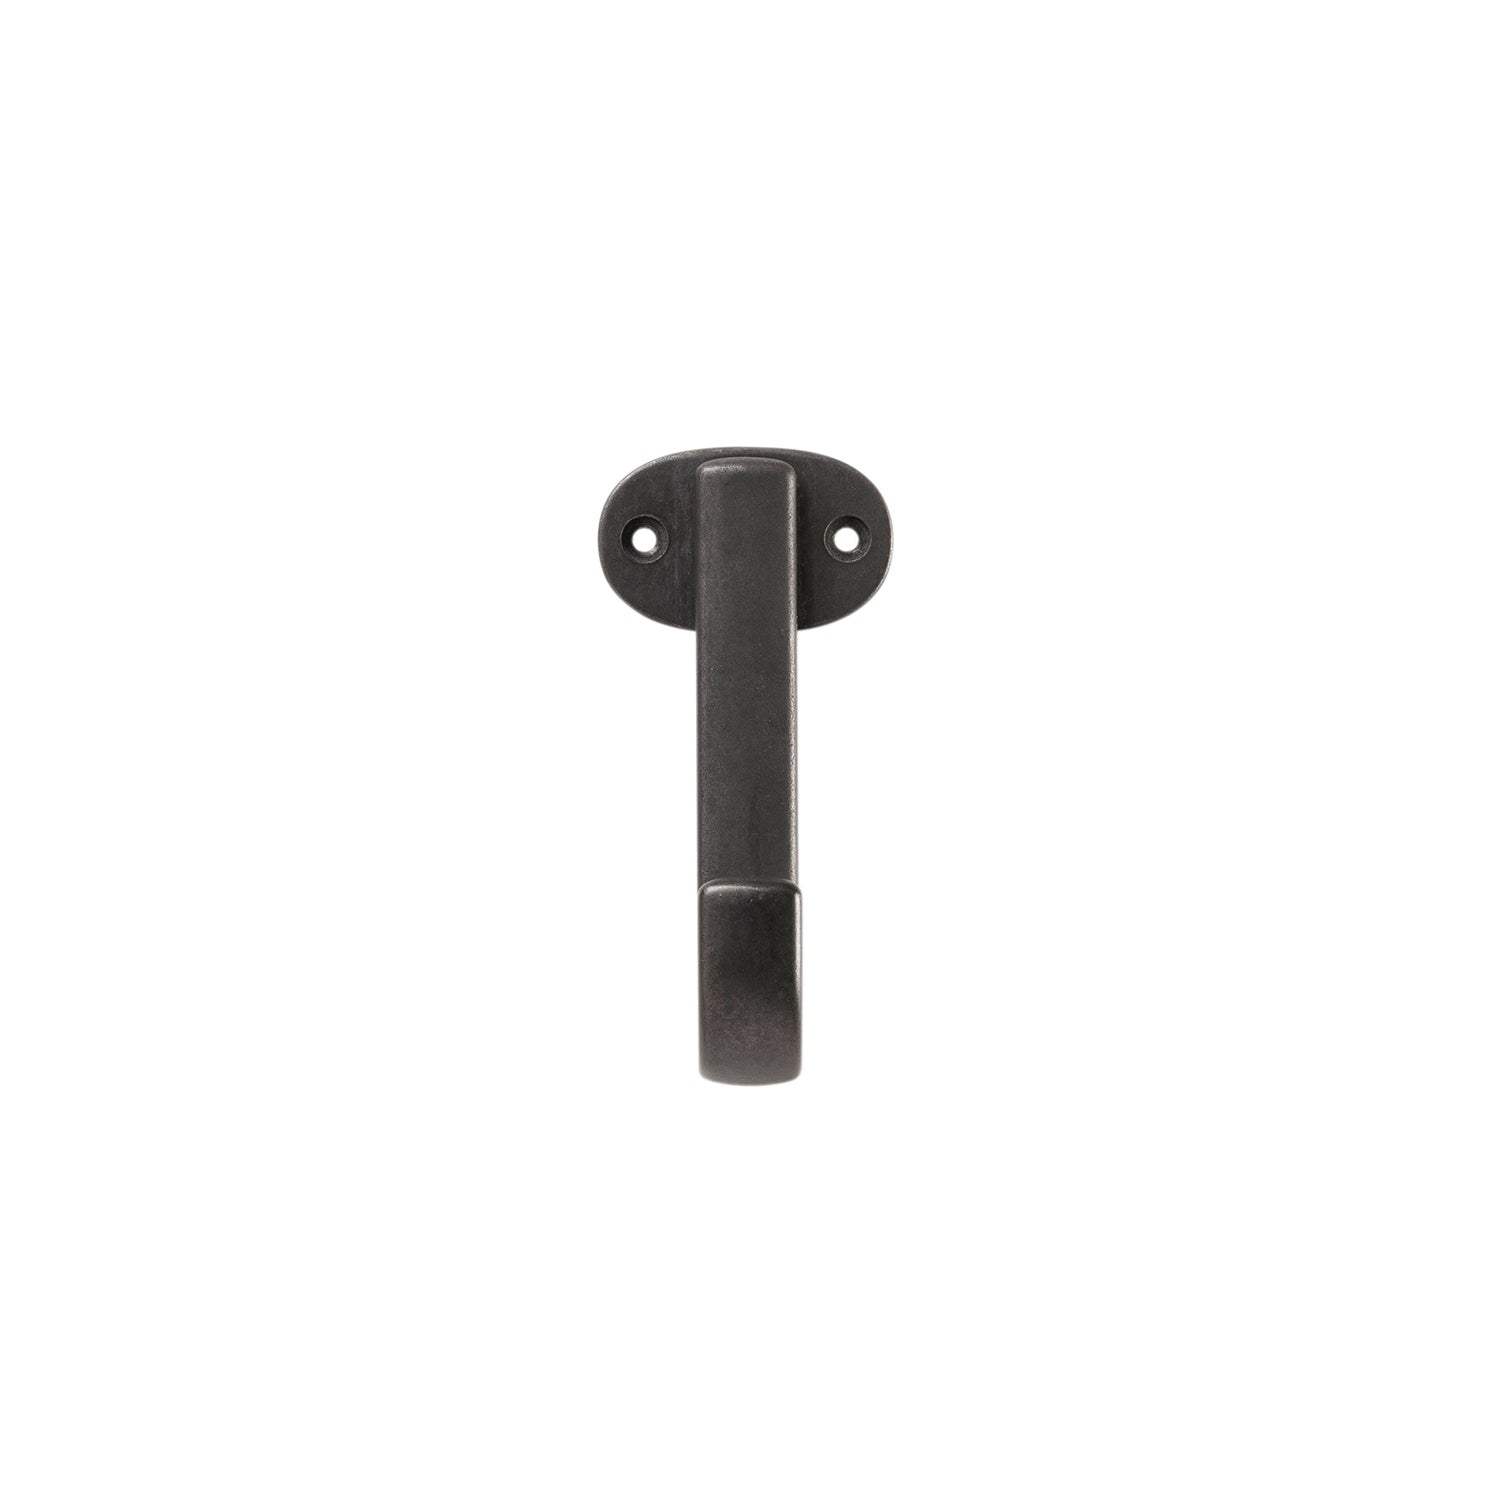 Hickory Hardware S077189-BI Euro Contemporary Decorative Hook in Black Iron